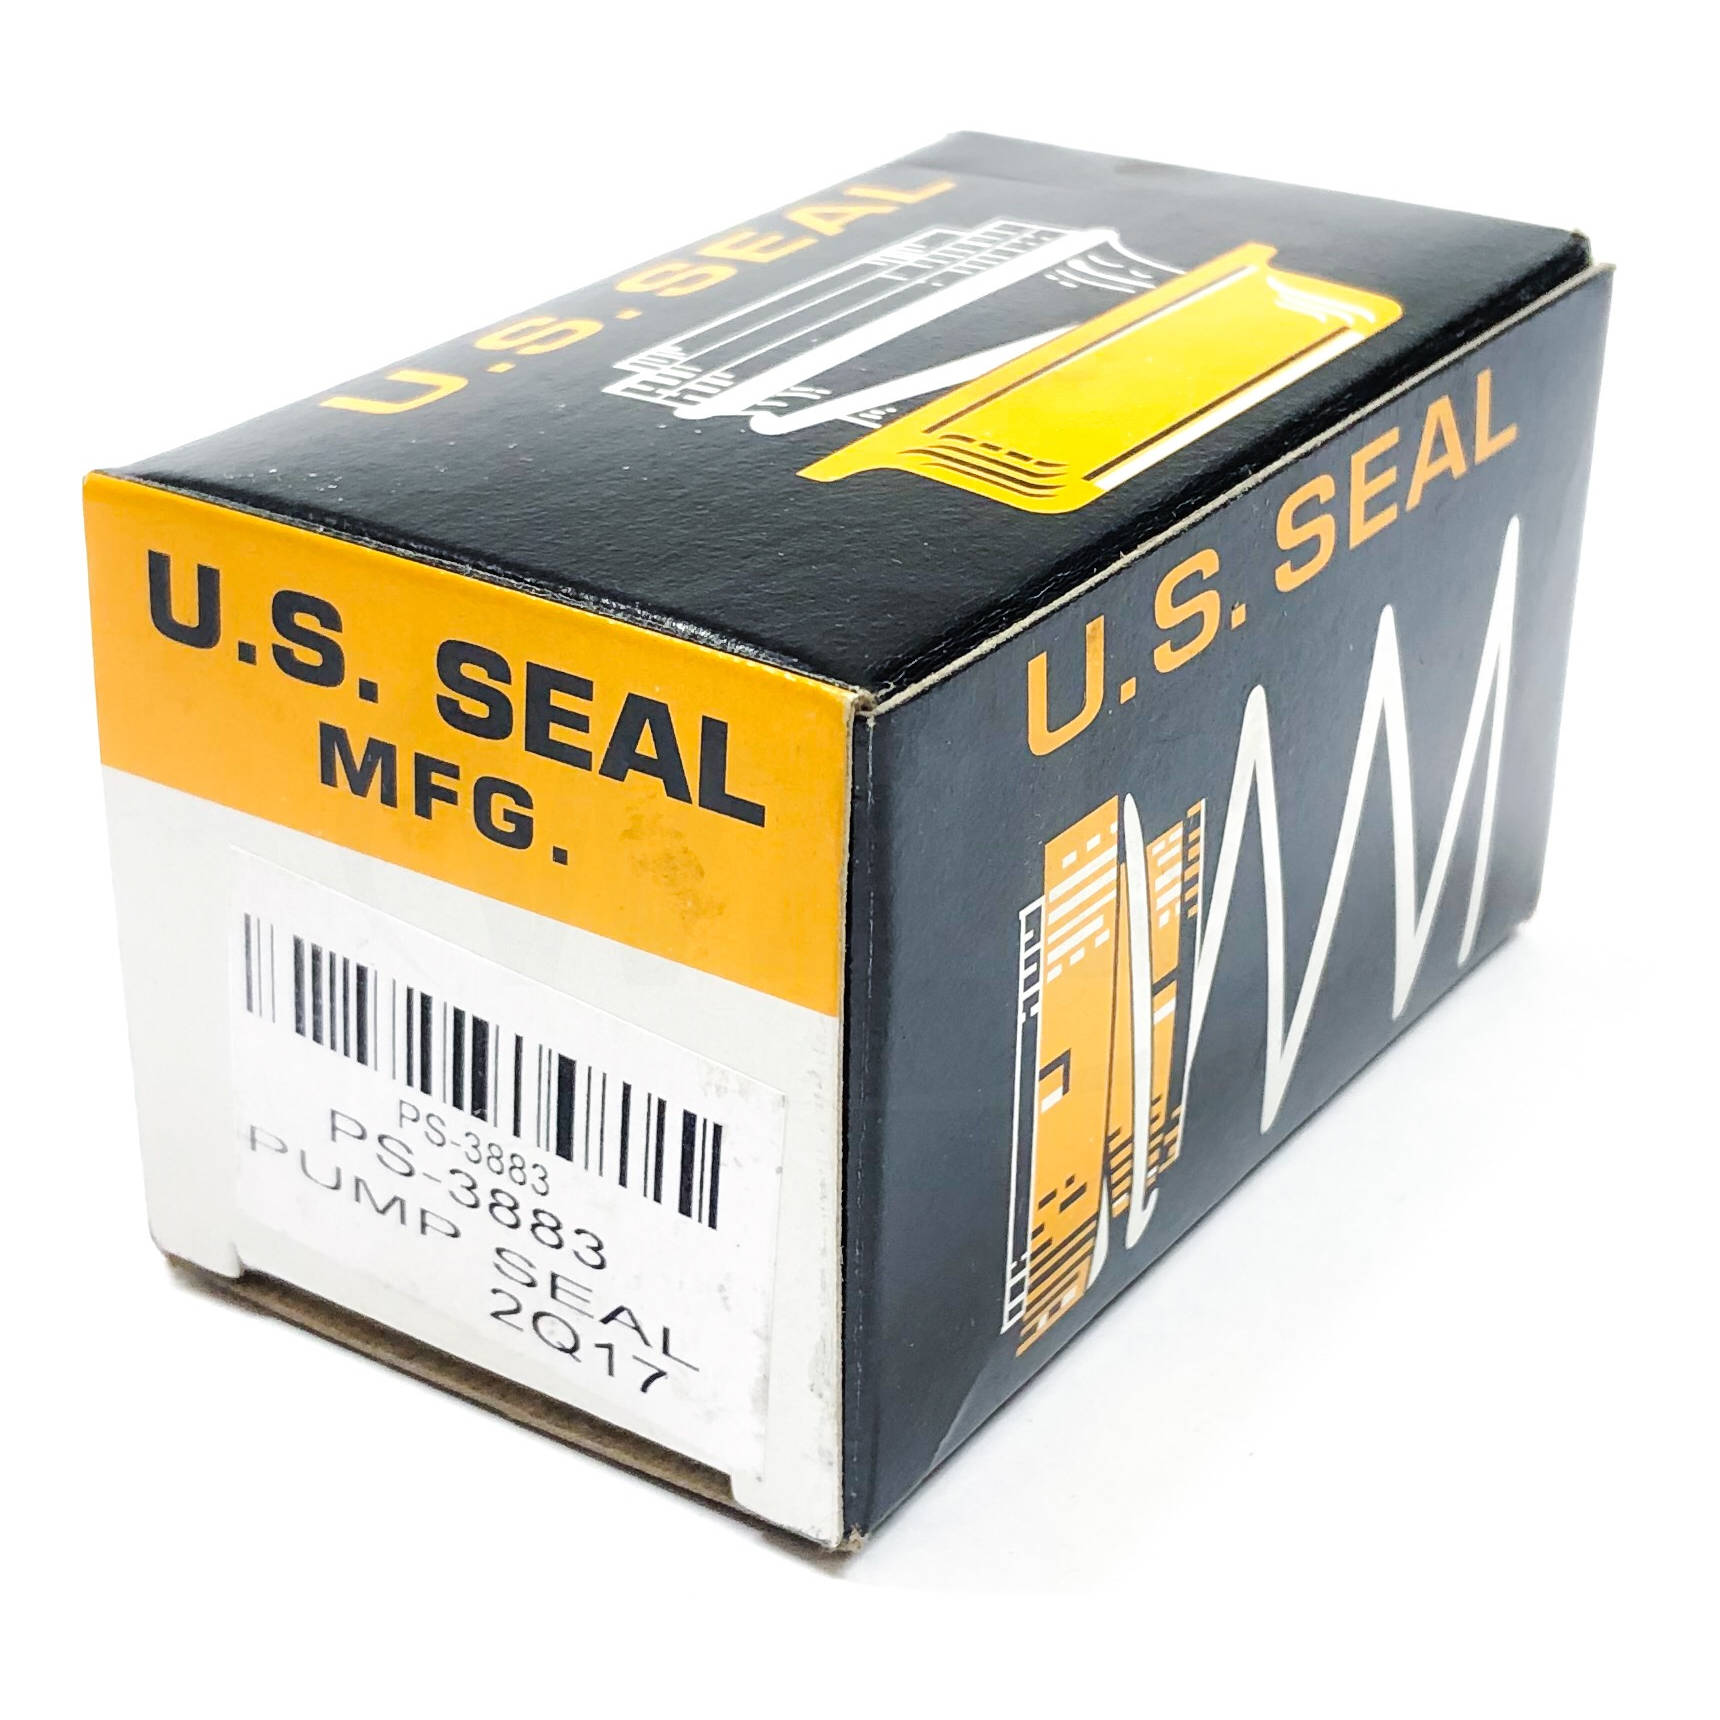 PS-3883 U.S. Seal Mfg 1-1/4' Pump Seal 6